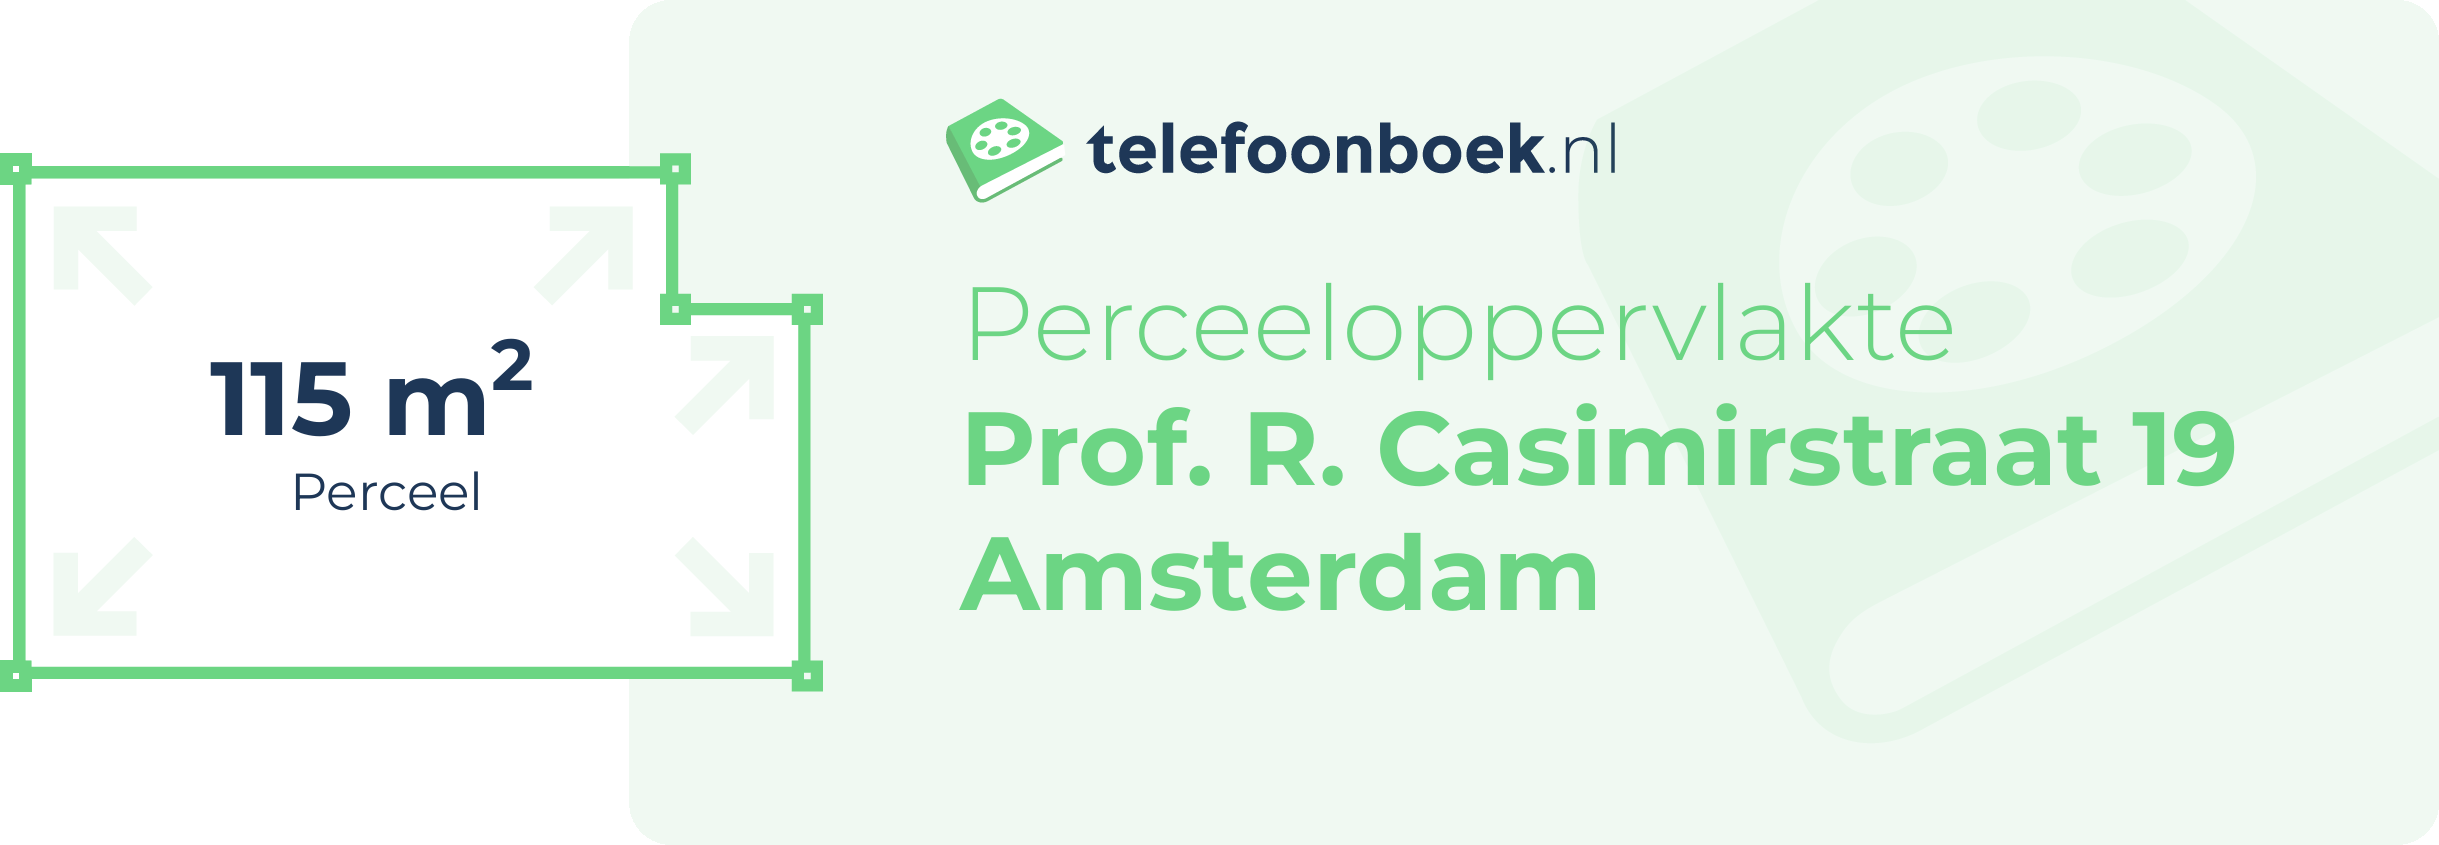 Perceeloppervlakte Prof. R. Casimirstraat 19 Amsterdam